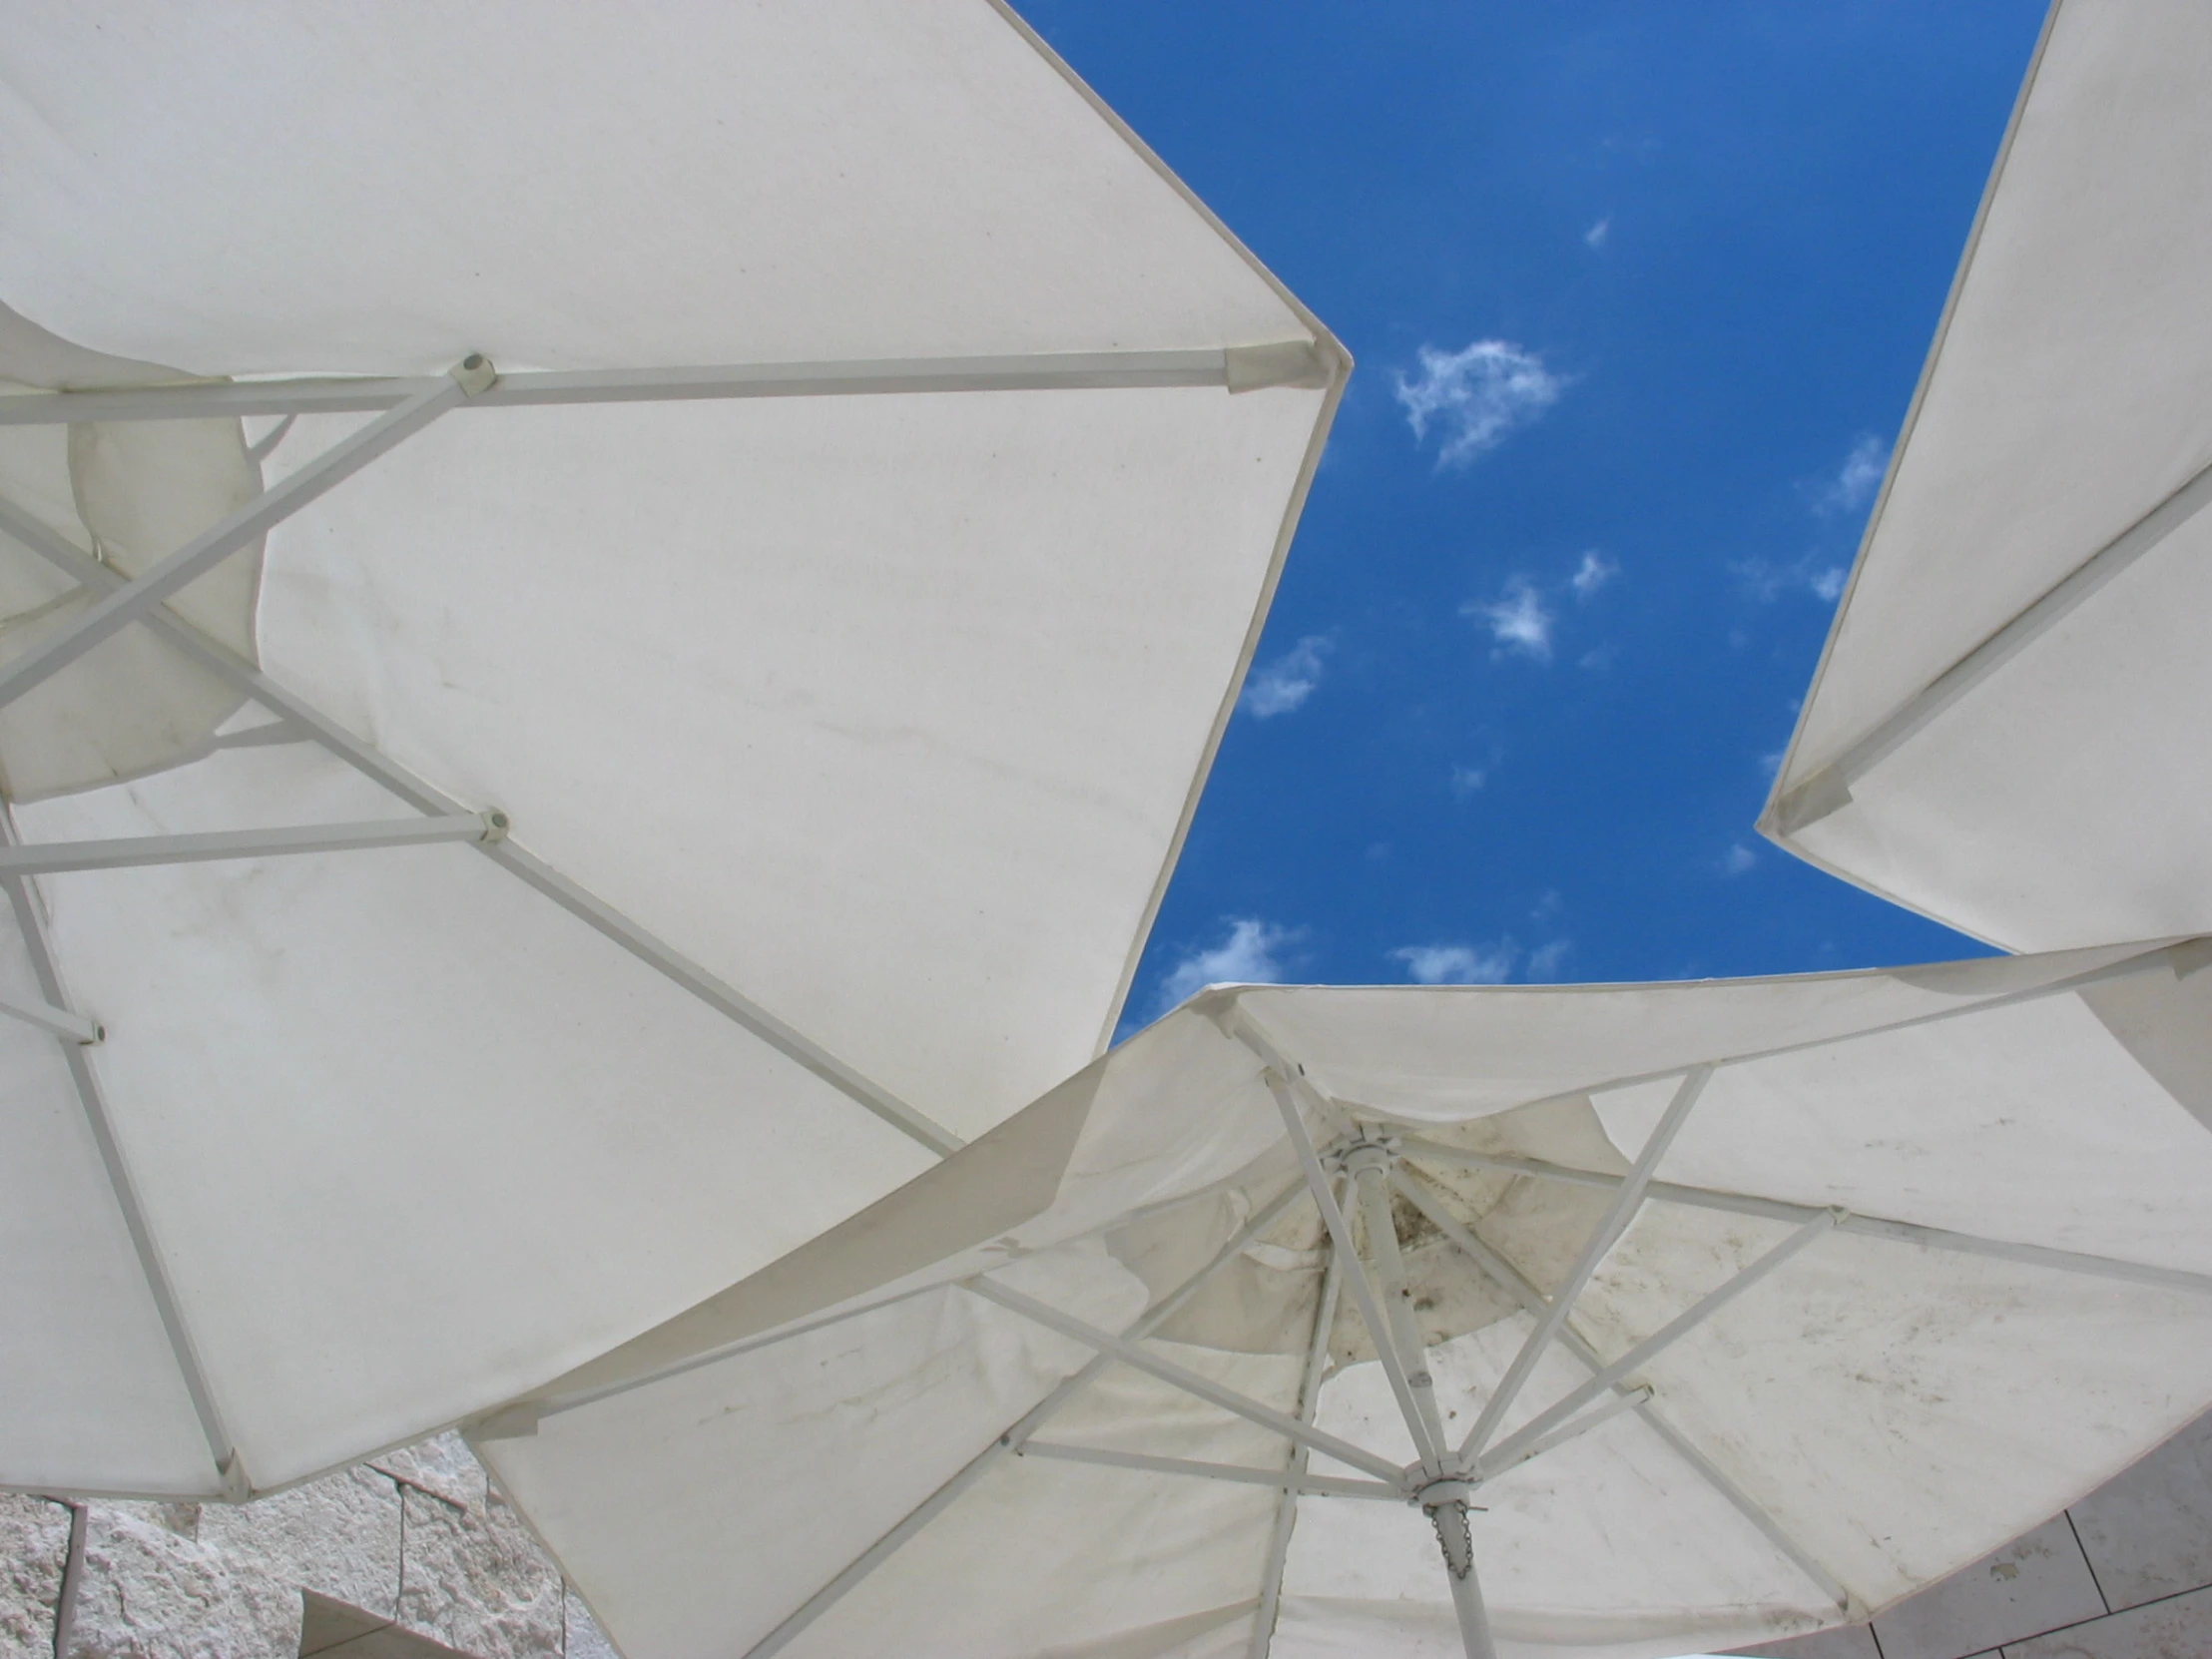 several white umbrellas are folded under a blue sky